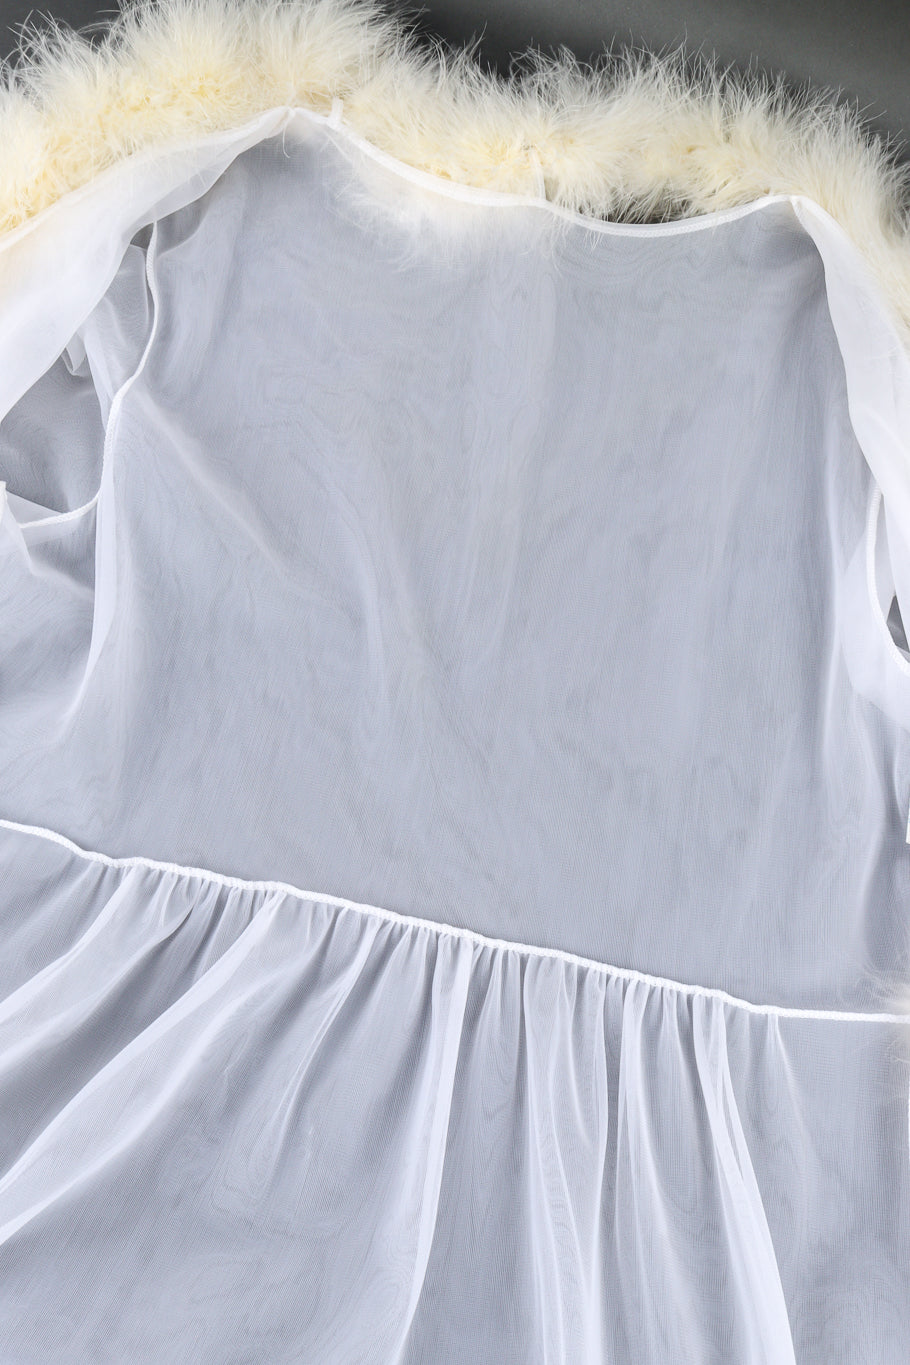 Vintage Sears Marabou Trim Robe & Nightgown Set robe interior @recess la